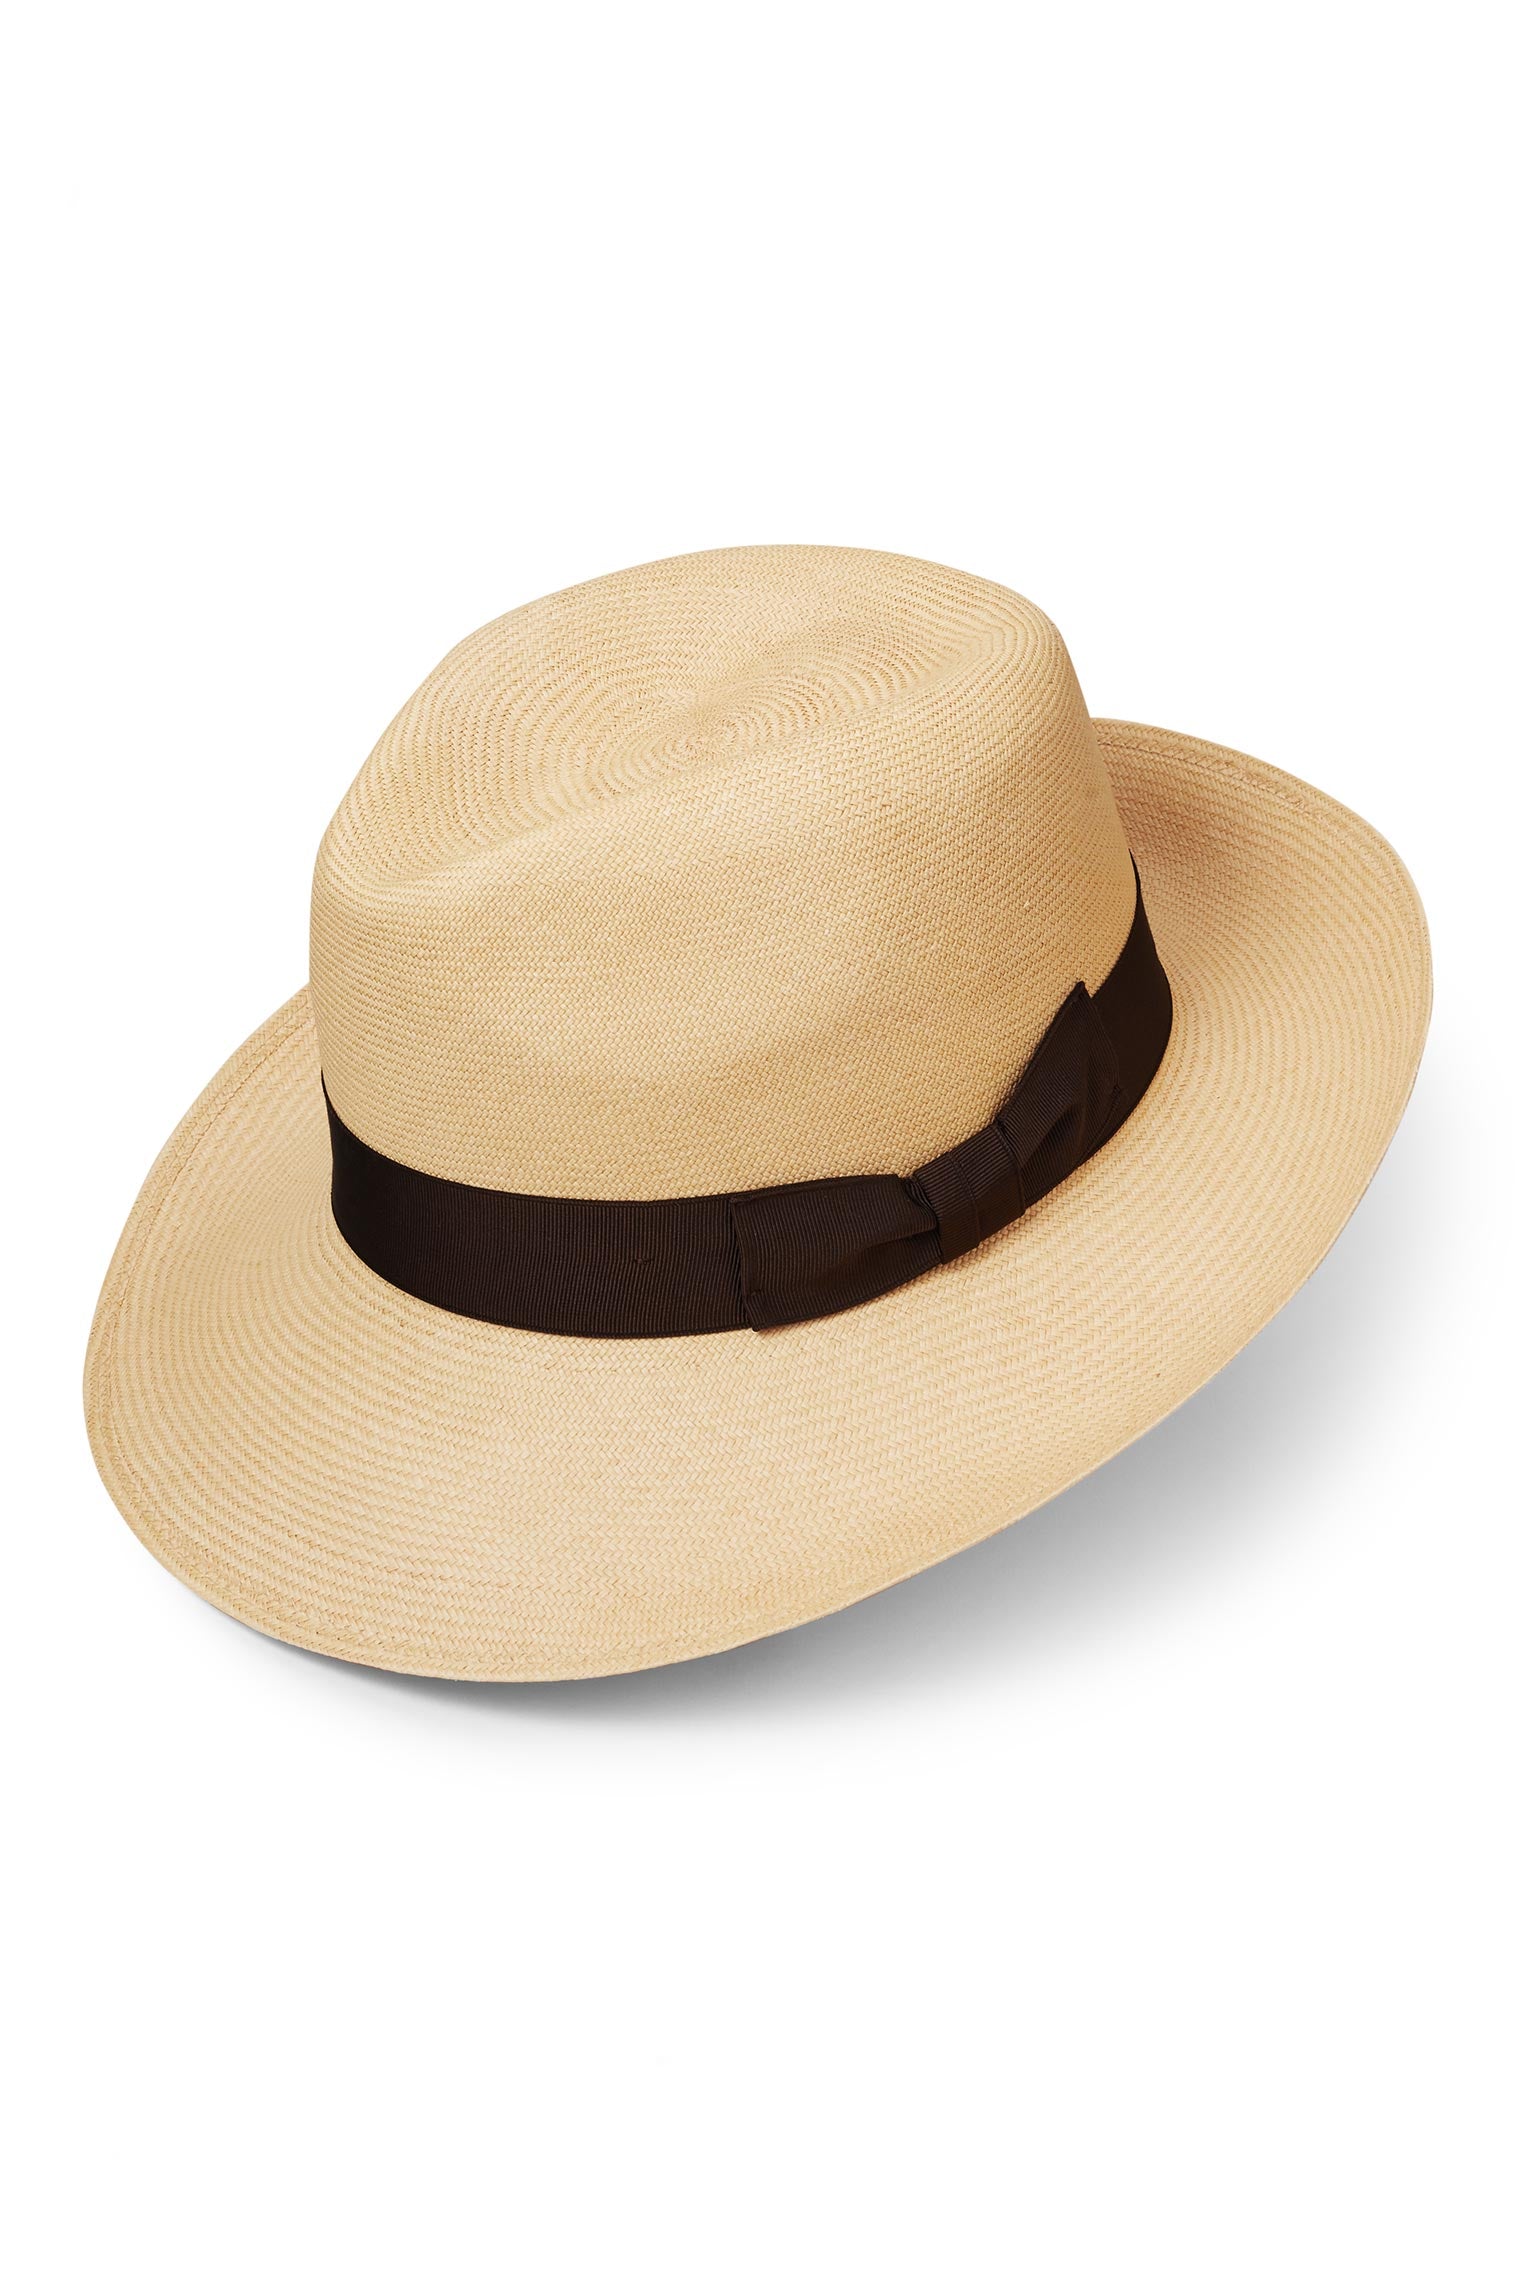 Ventnor Cuenca Ultra-fino Panama - New Season Hat Collection - Lock & Co. Hatters London UK